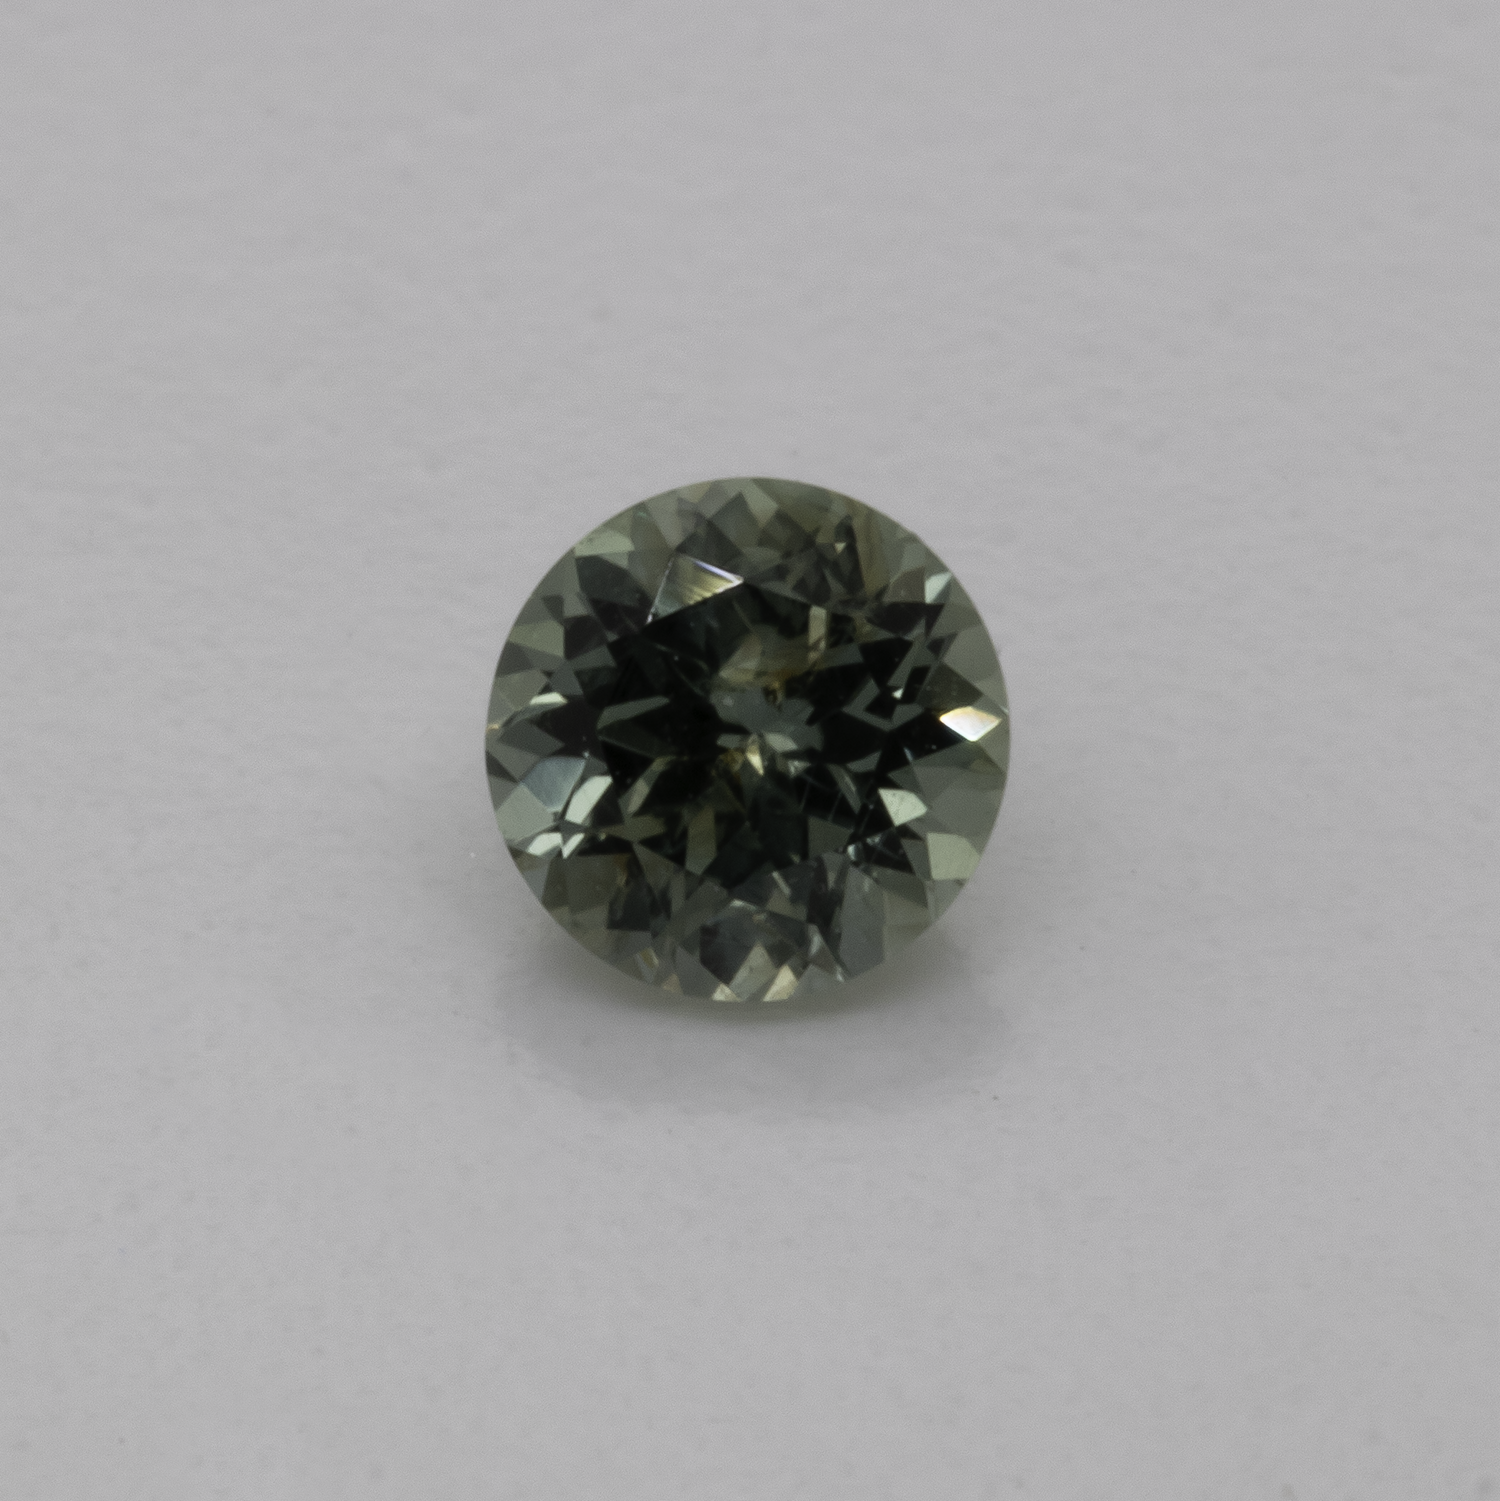 Saphir - grau/grün, rund, 4x4 mm, 0,34 cts, Nr. XSR11222